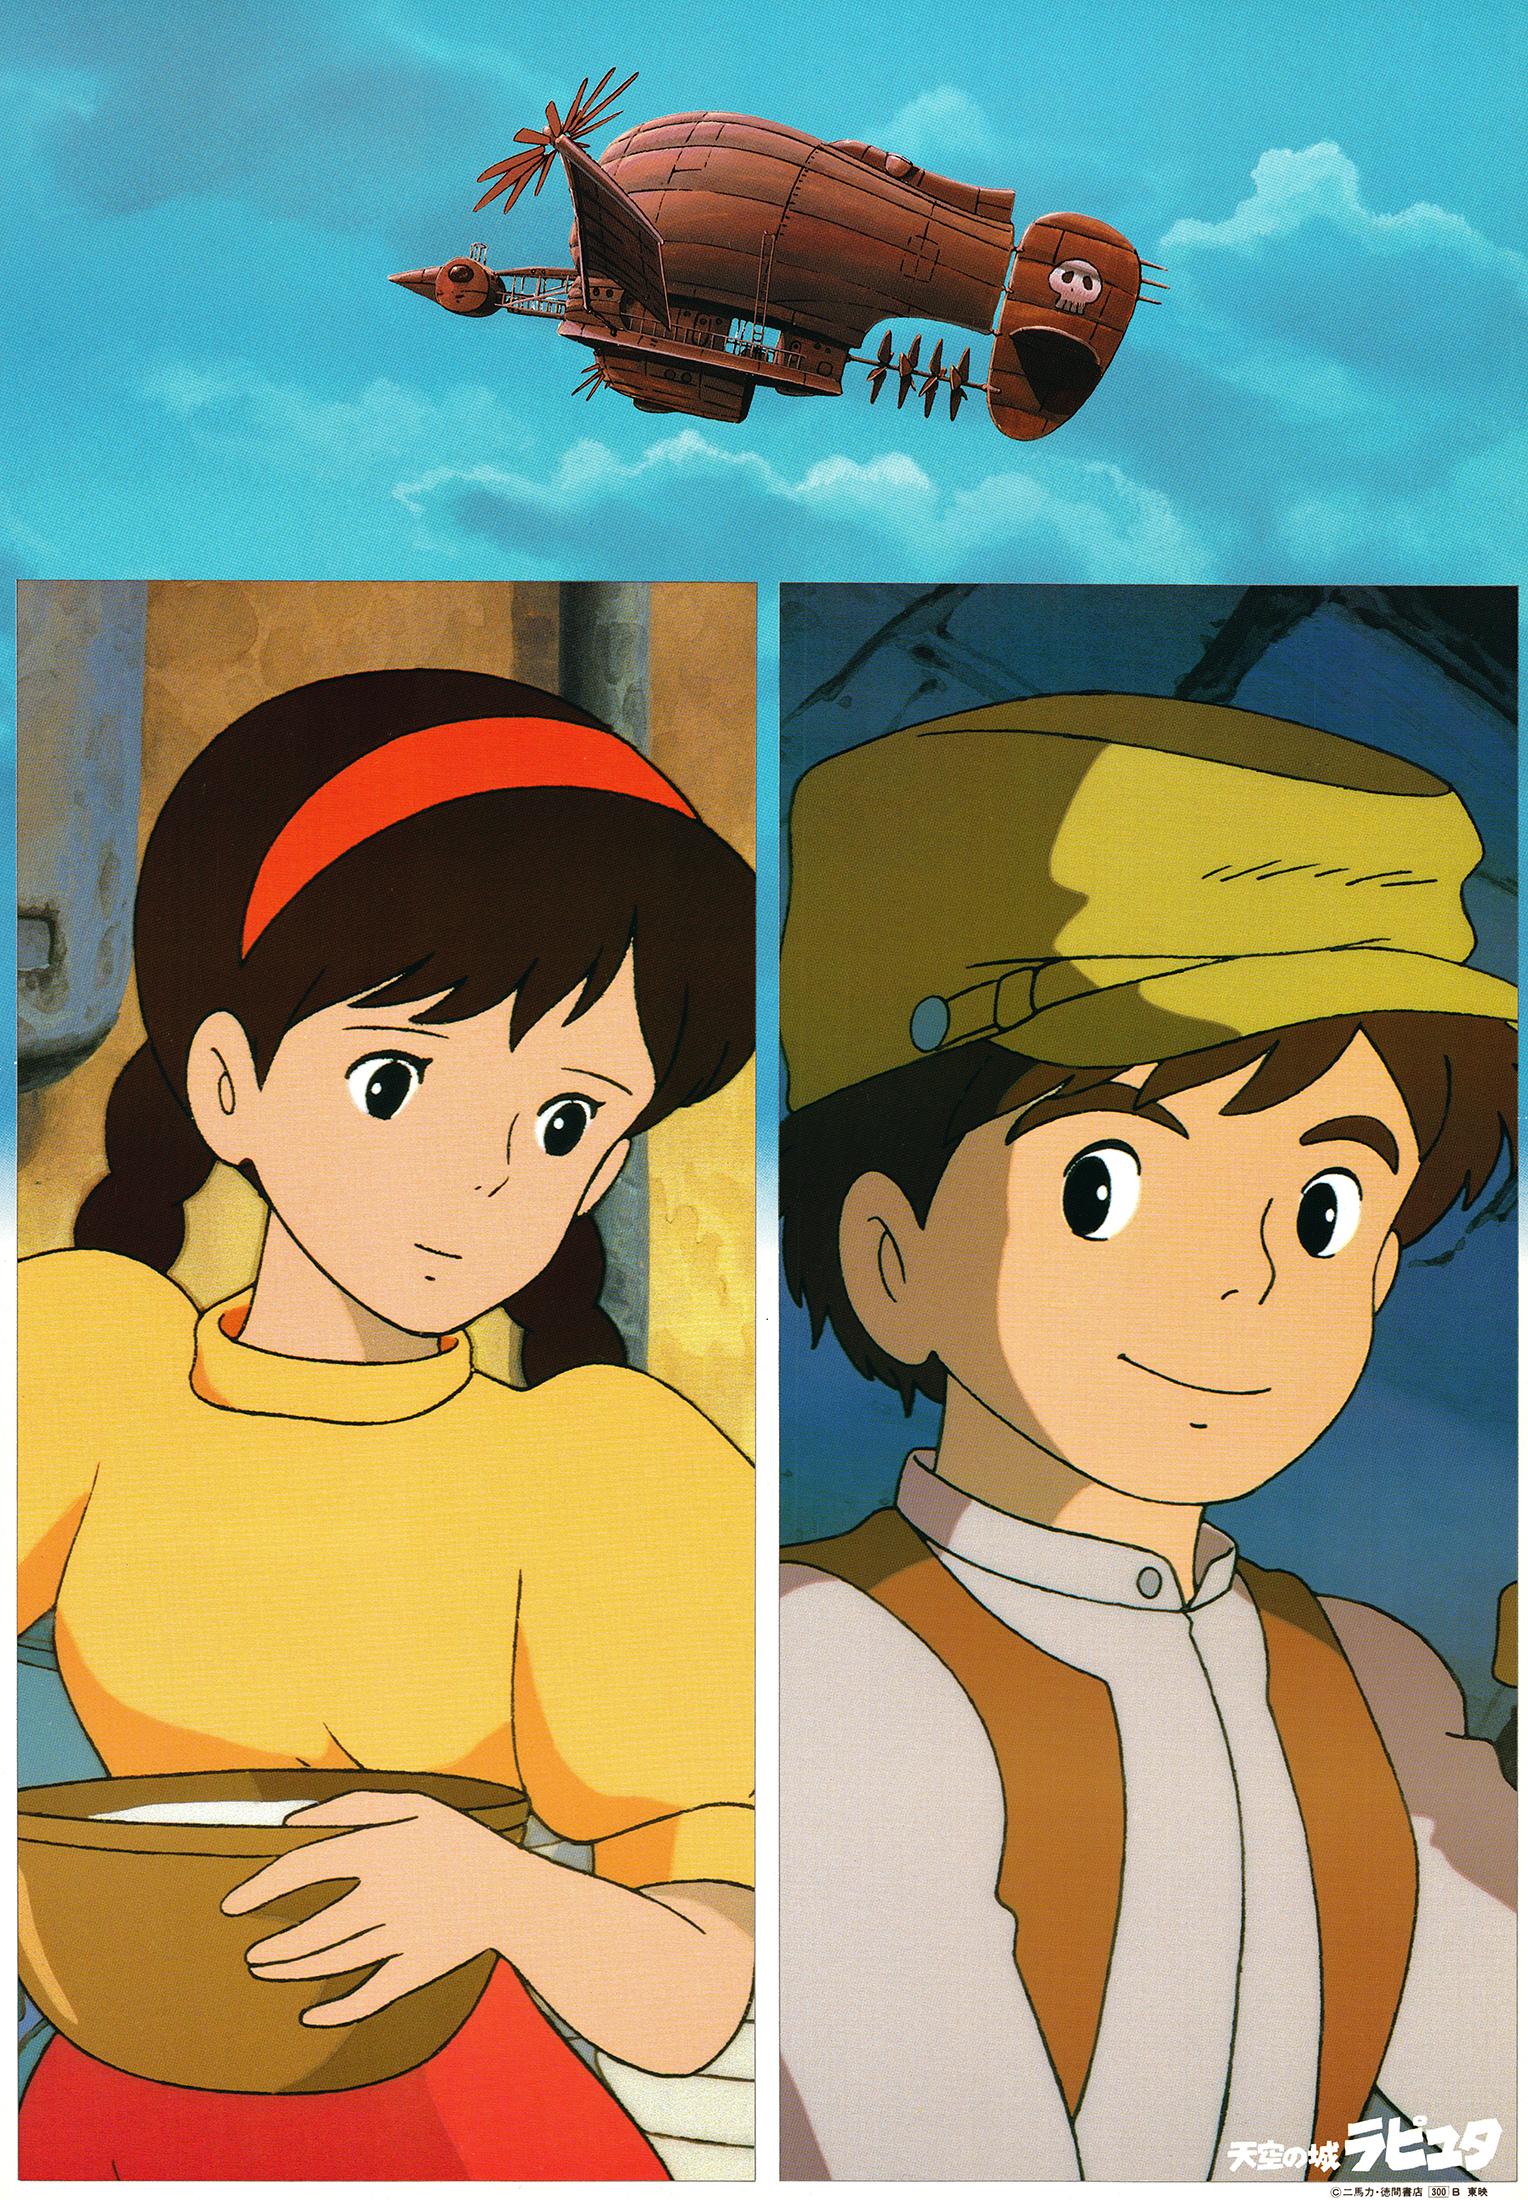 Laputa: Castle in the Sky Original Vintage Movie Poster, 1986, Studio Ghibli - Print by Unknown